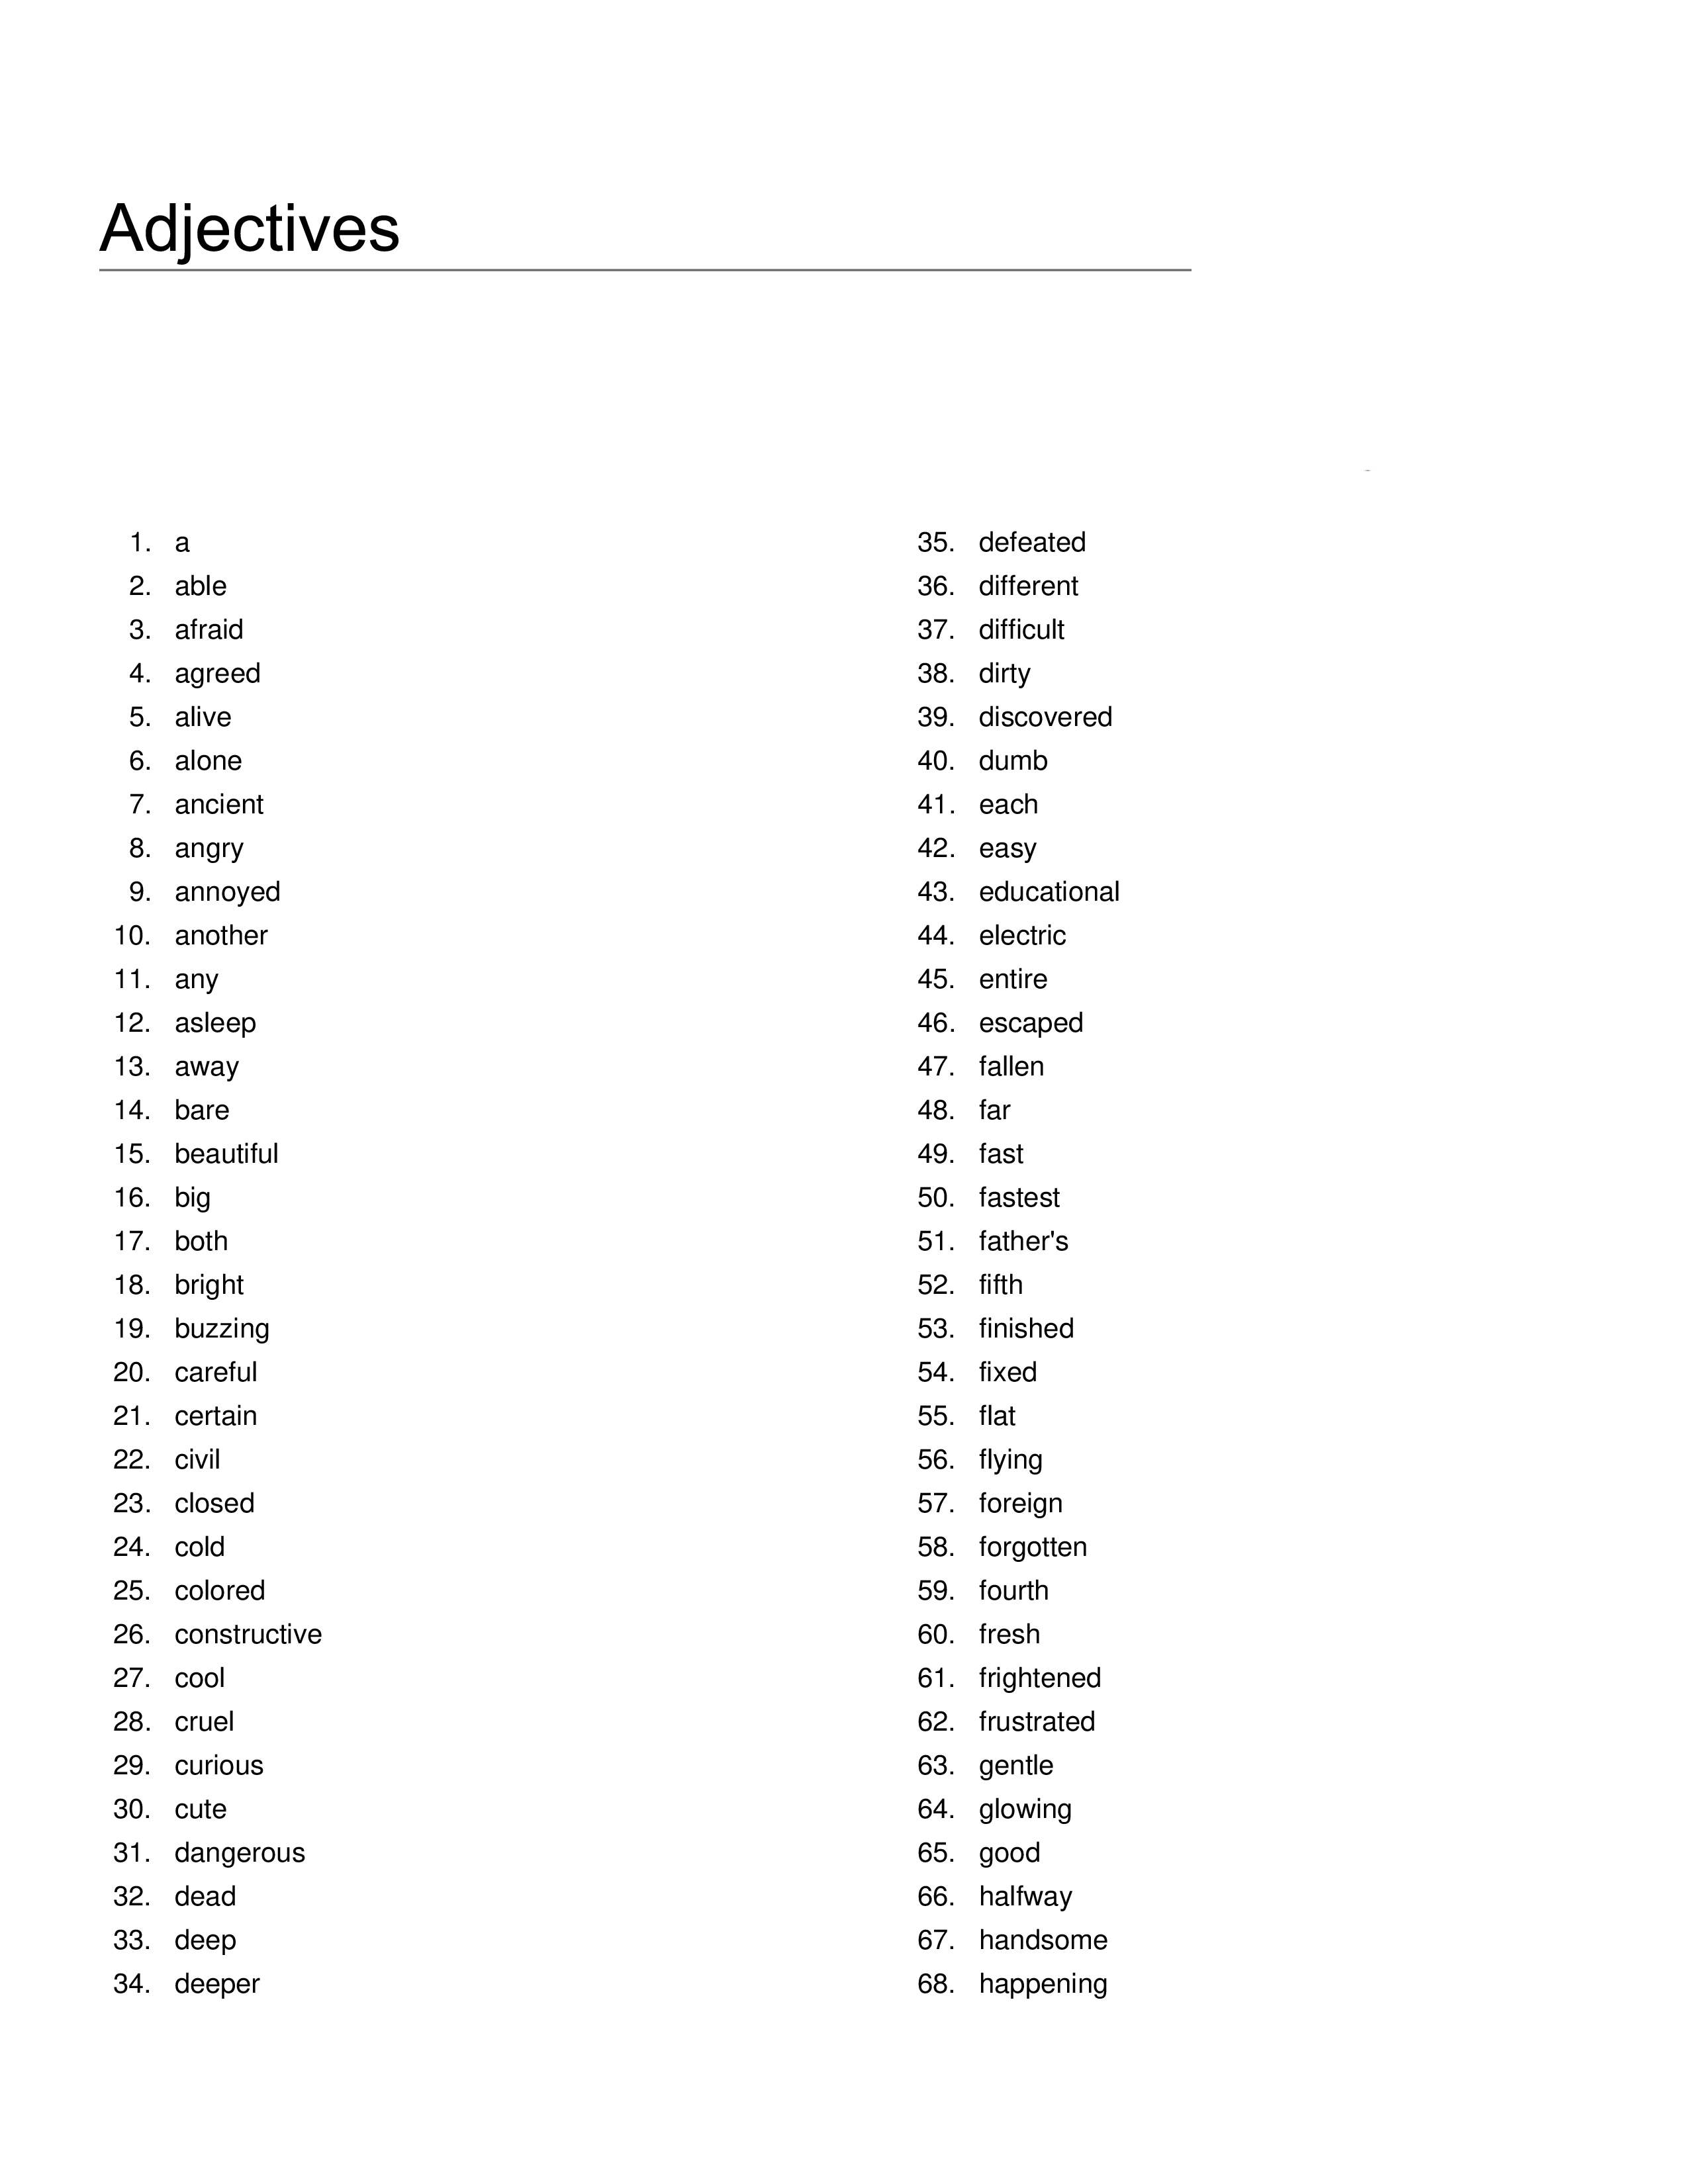 list of adjectives plantilla imagen principal